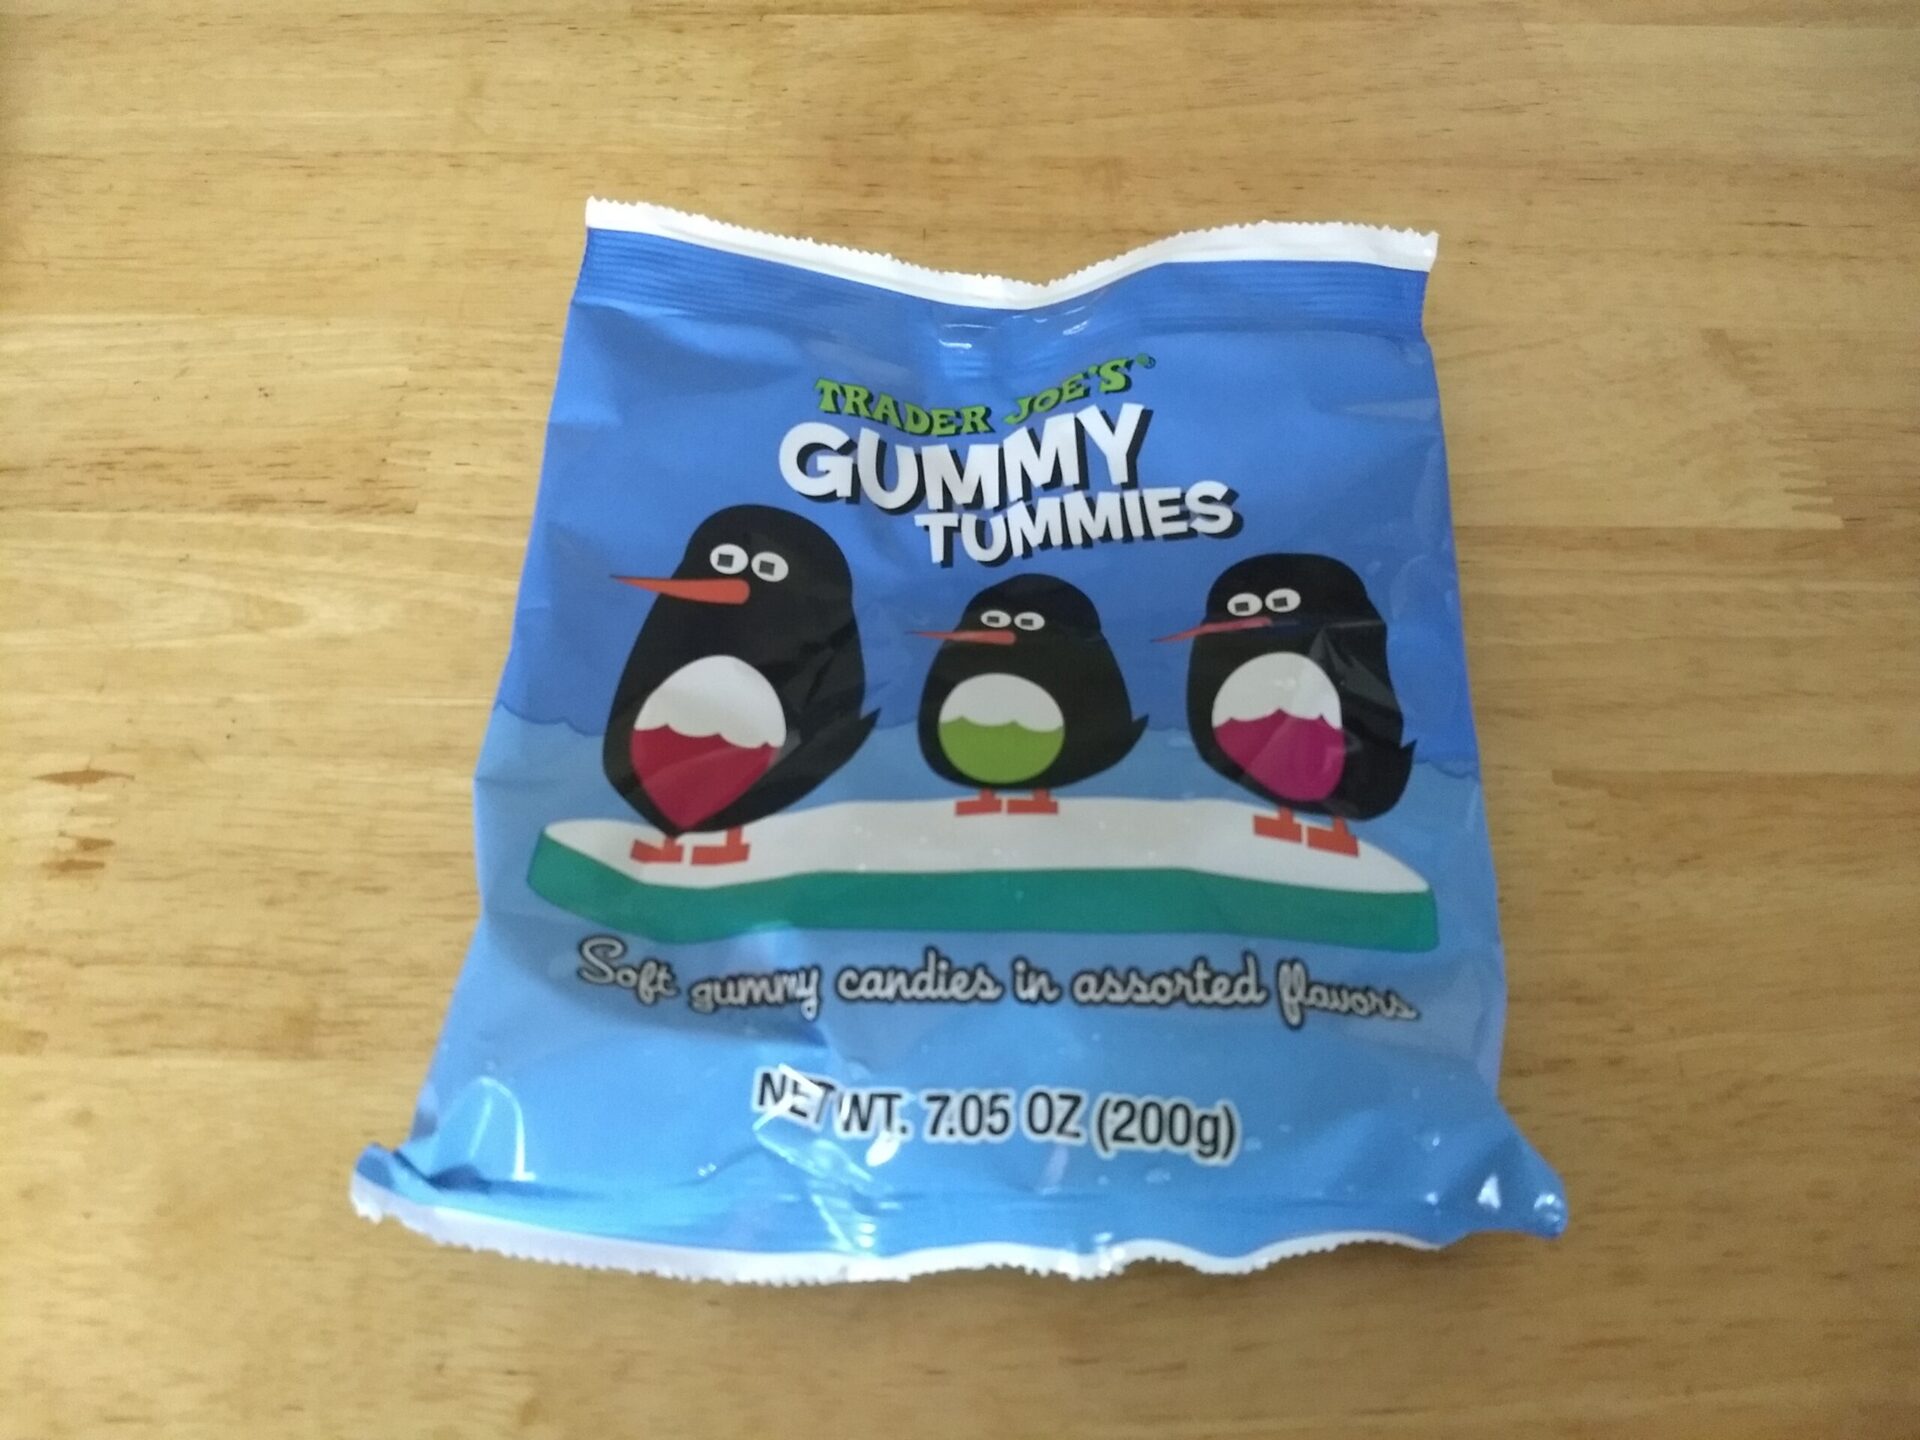 Trader Joe's Gummy Tummies